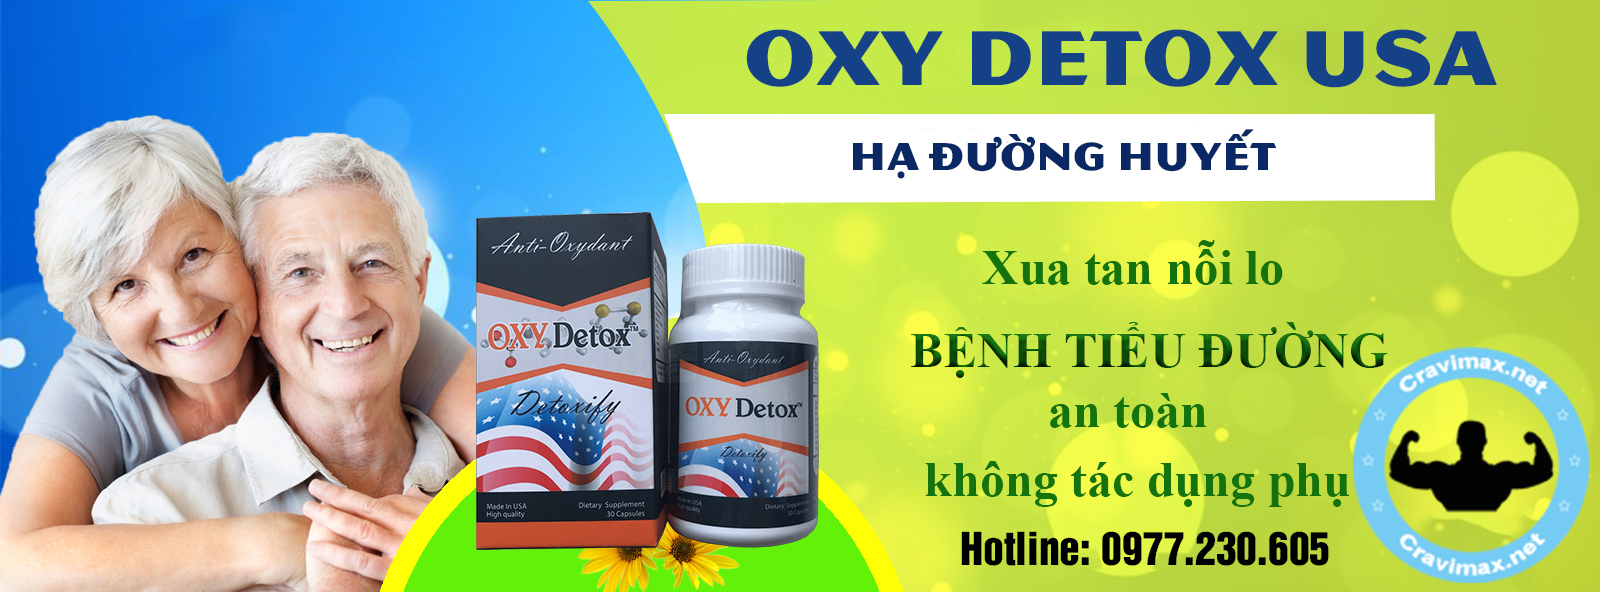 giới thiệu oxy detox usa